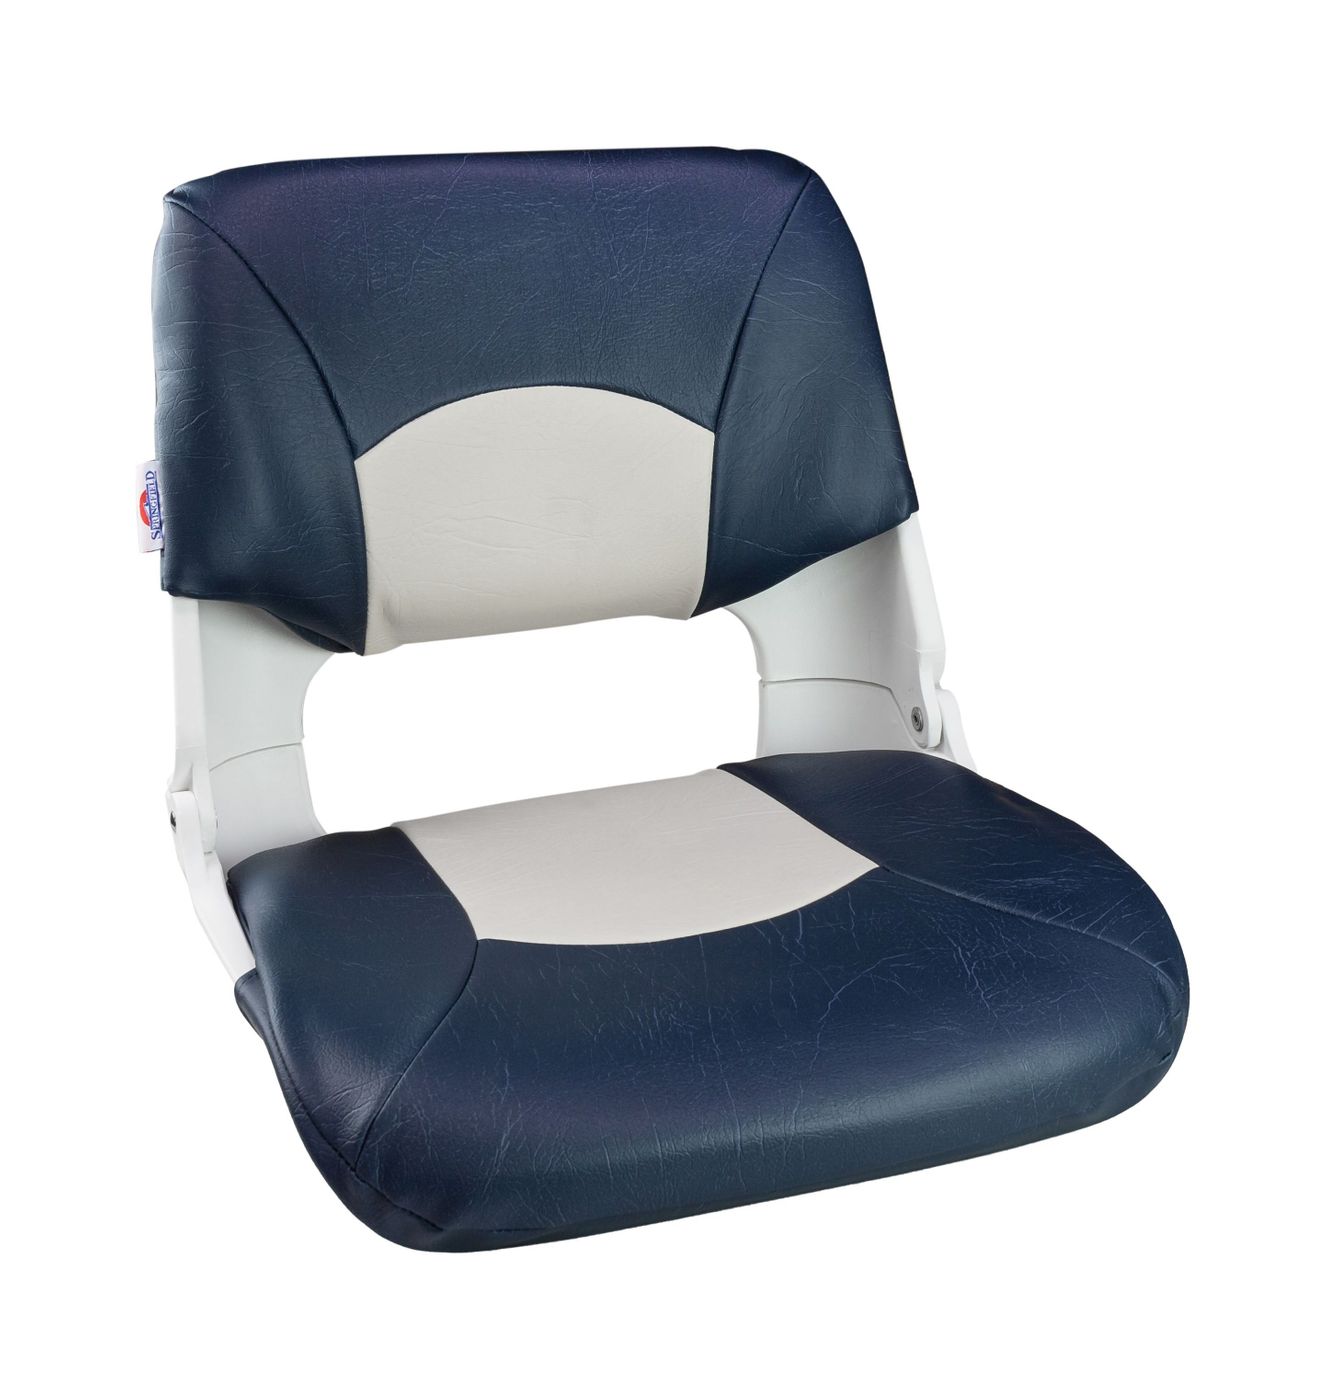 Кресло складное мягкое SKIPPER, цвет синий/белый 1061016 соковыжималка центробежная starwind sj2326 750 вт синий белый